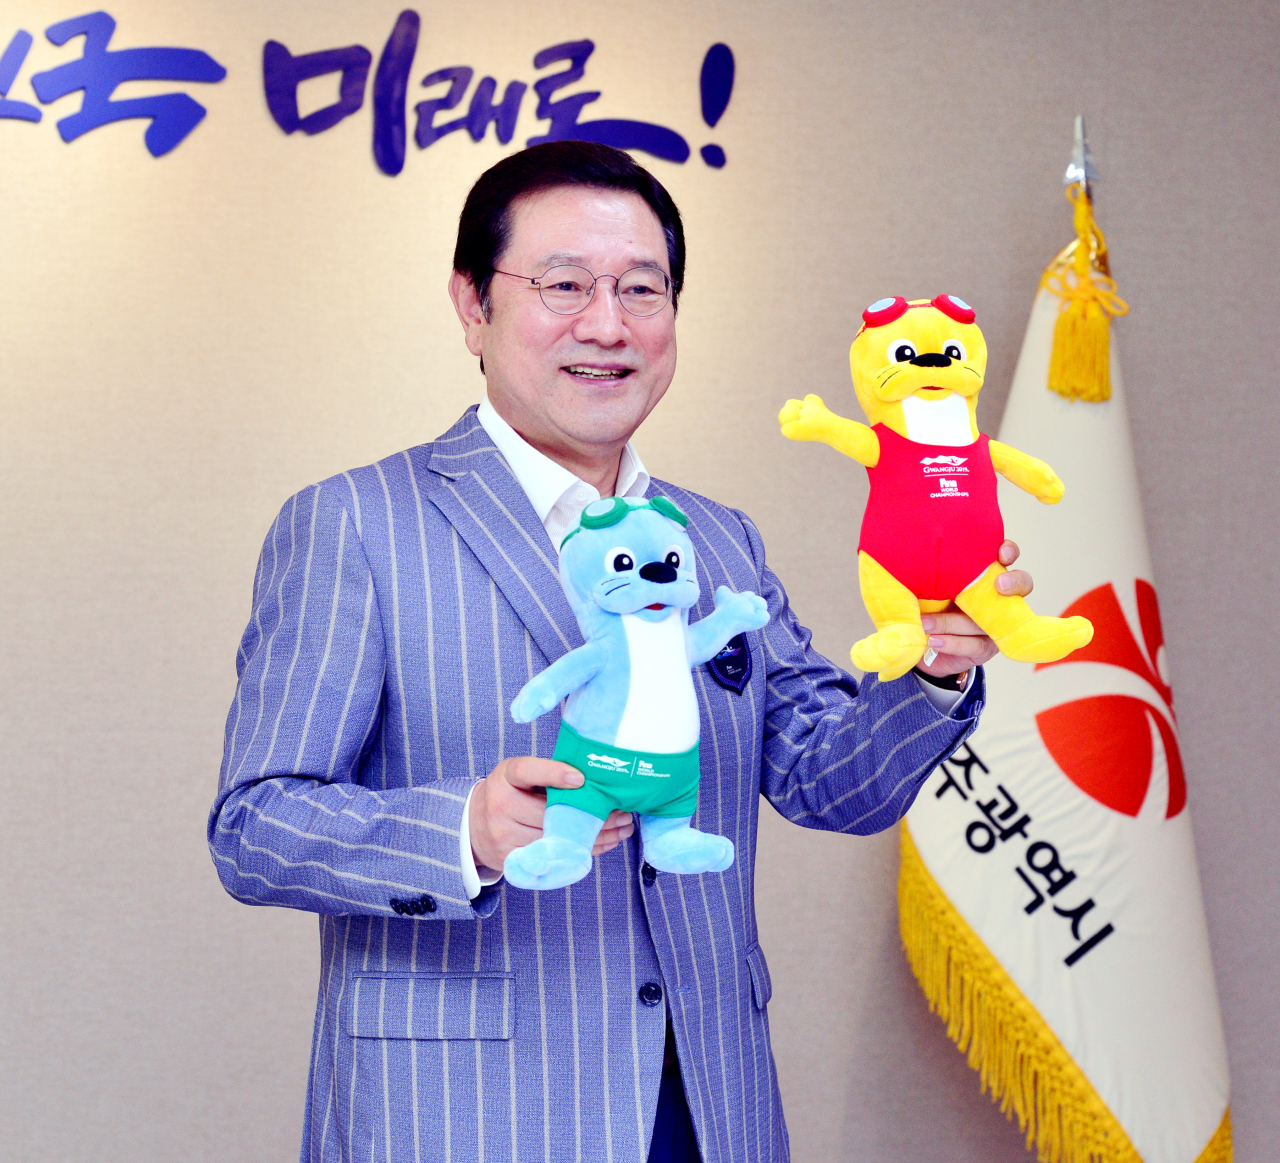 Gwangju Mayor Lee Yong-sup poses with mascots for the 18th FINA World Championships Gwangju 2019 before an interview with The Korea Herald at the Gwangju Metropolitan City Hall on Tuesday. (Park Hyun-koo/The Korea Herald)